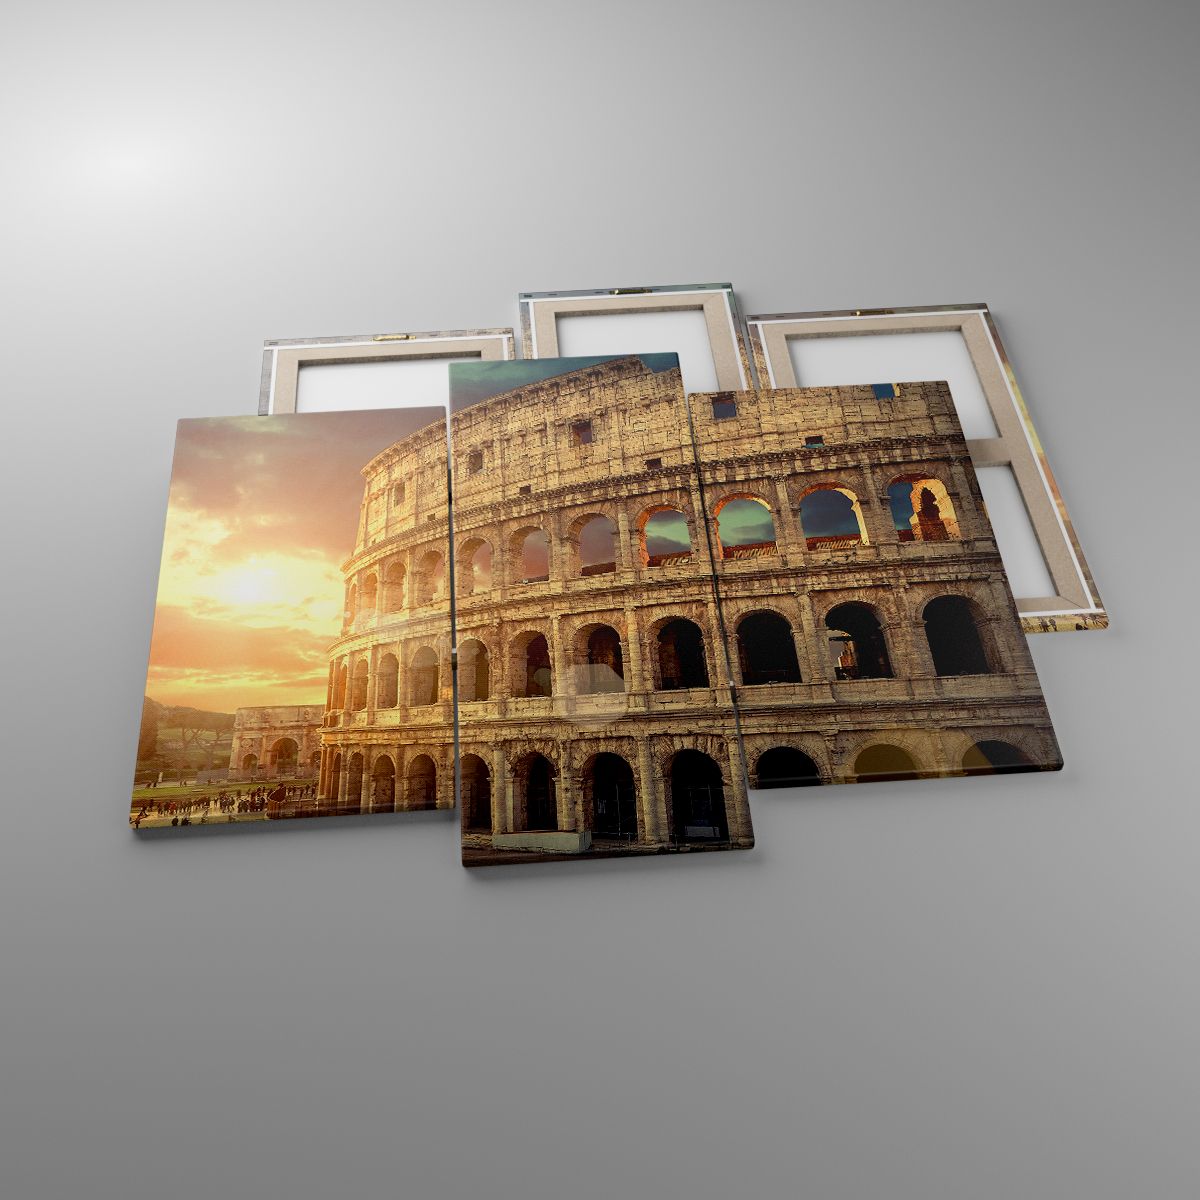 Obrazy Koloseum, Obrazy Rzym, Obrazy Architektura, Obrazy Włochy, Obrazy Kultura